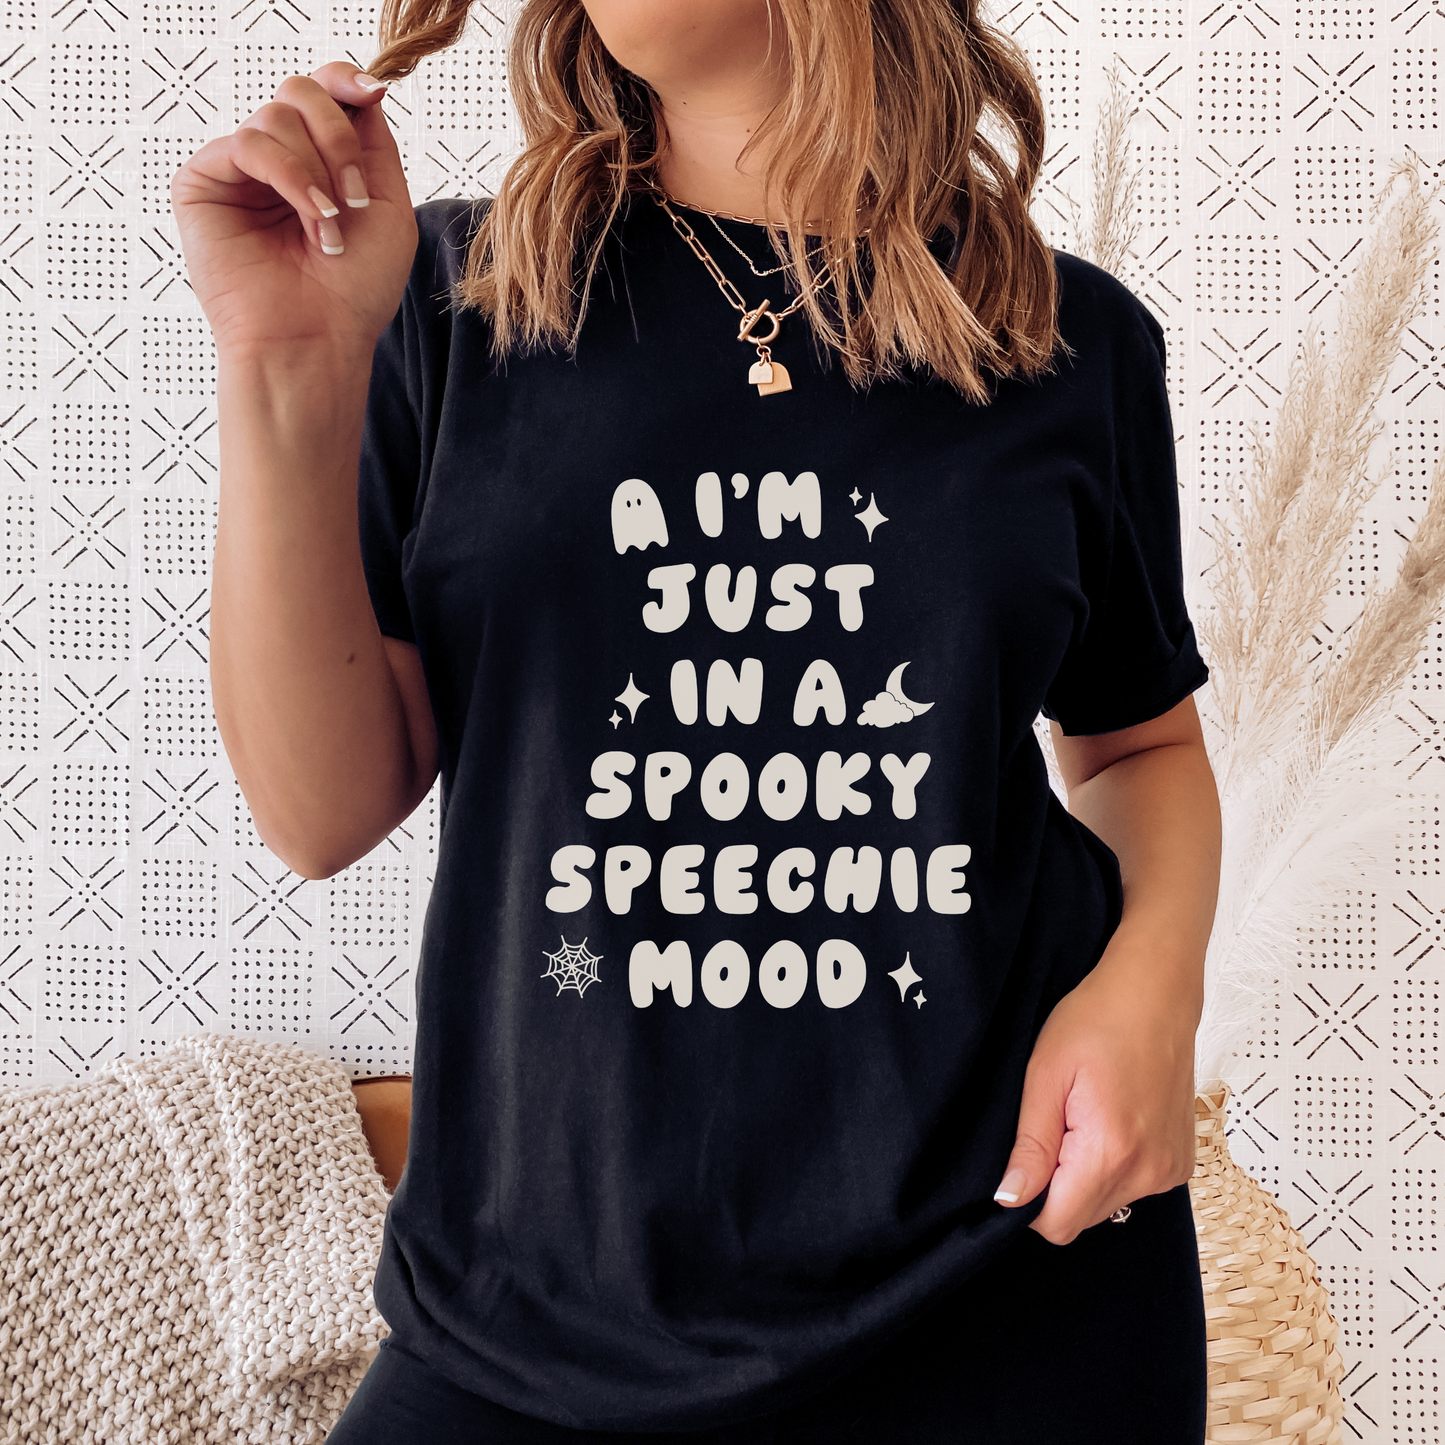 Spooky Speechie Mood Jersey T-Shirt